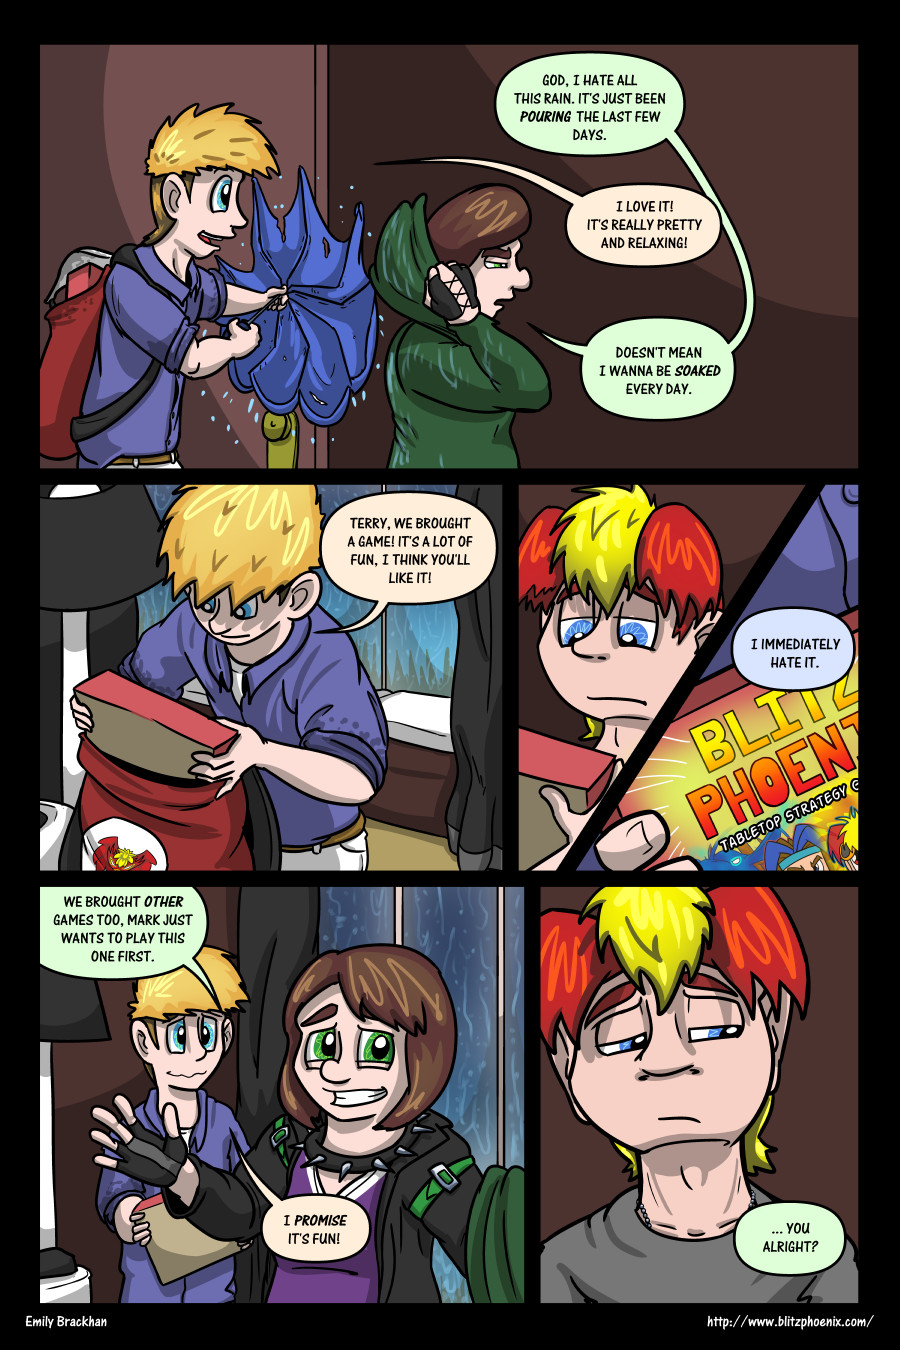 Blitz Phoenix - Chapter 13, Page 5